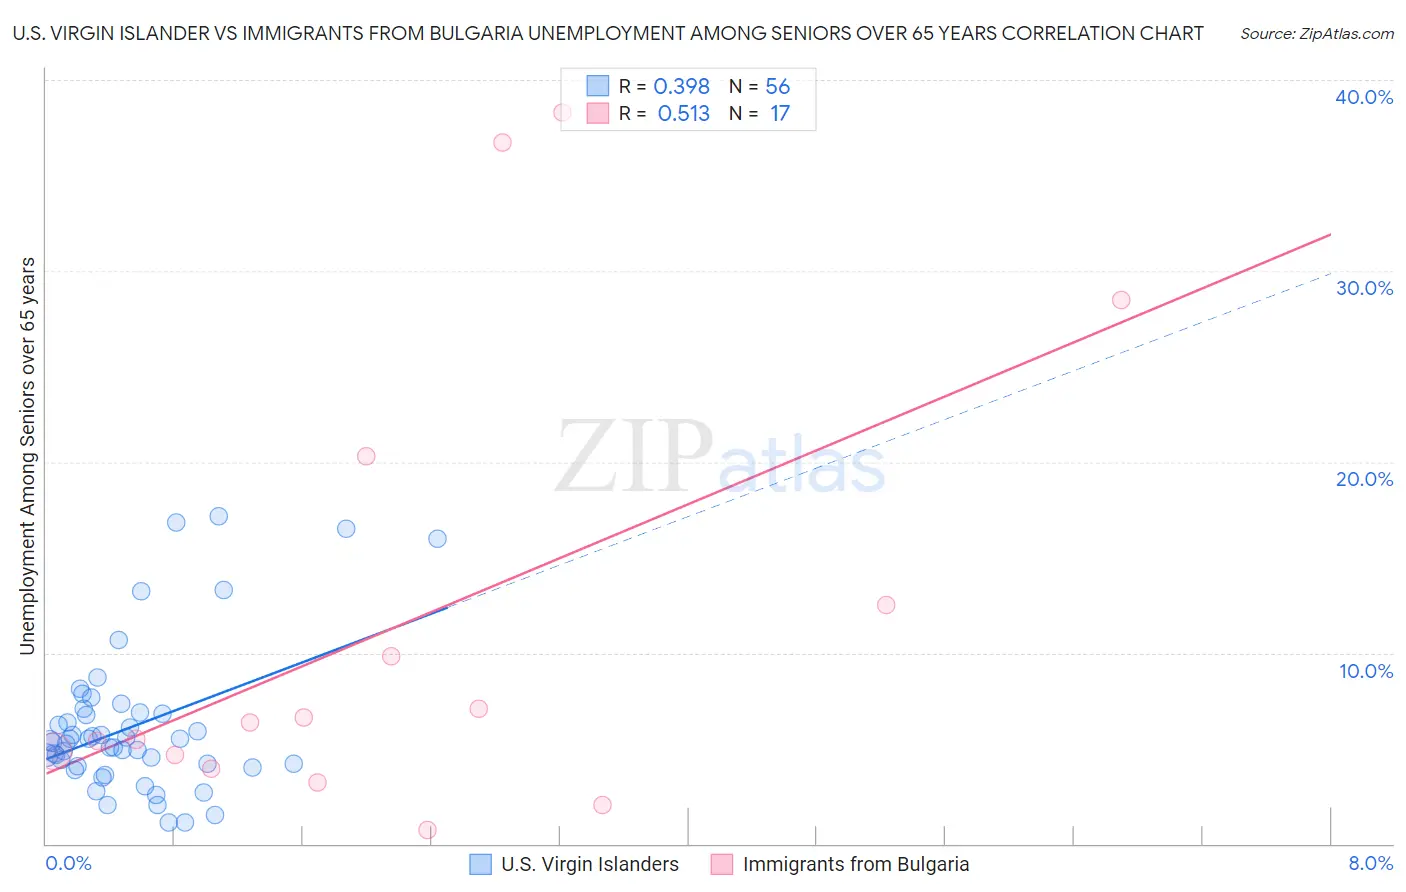 U.S. Virgin Islander vs Immigrants from Bulgaria Unemployment Among Seniors over 65 years